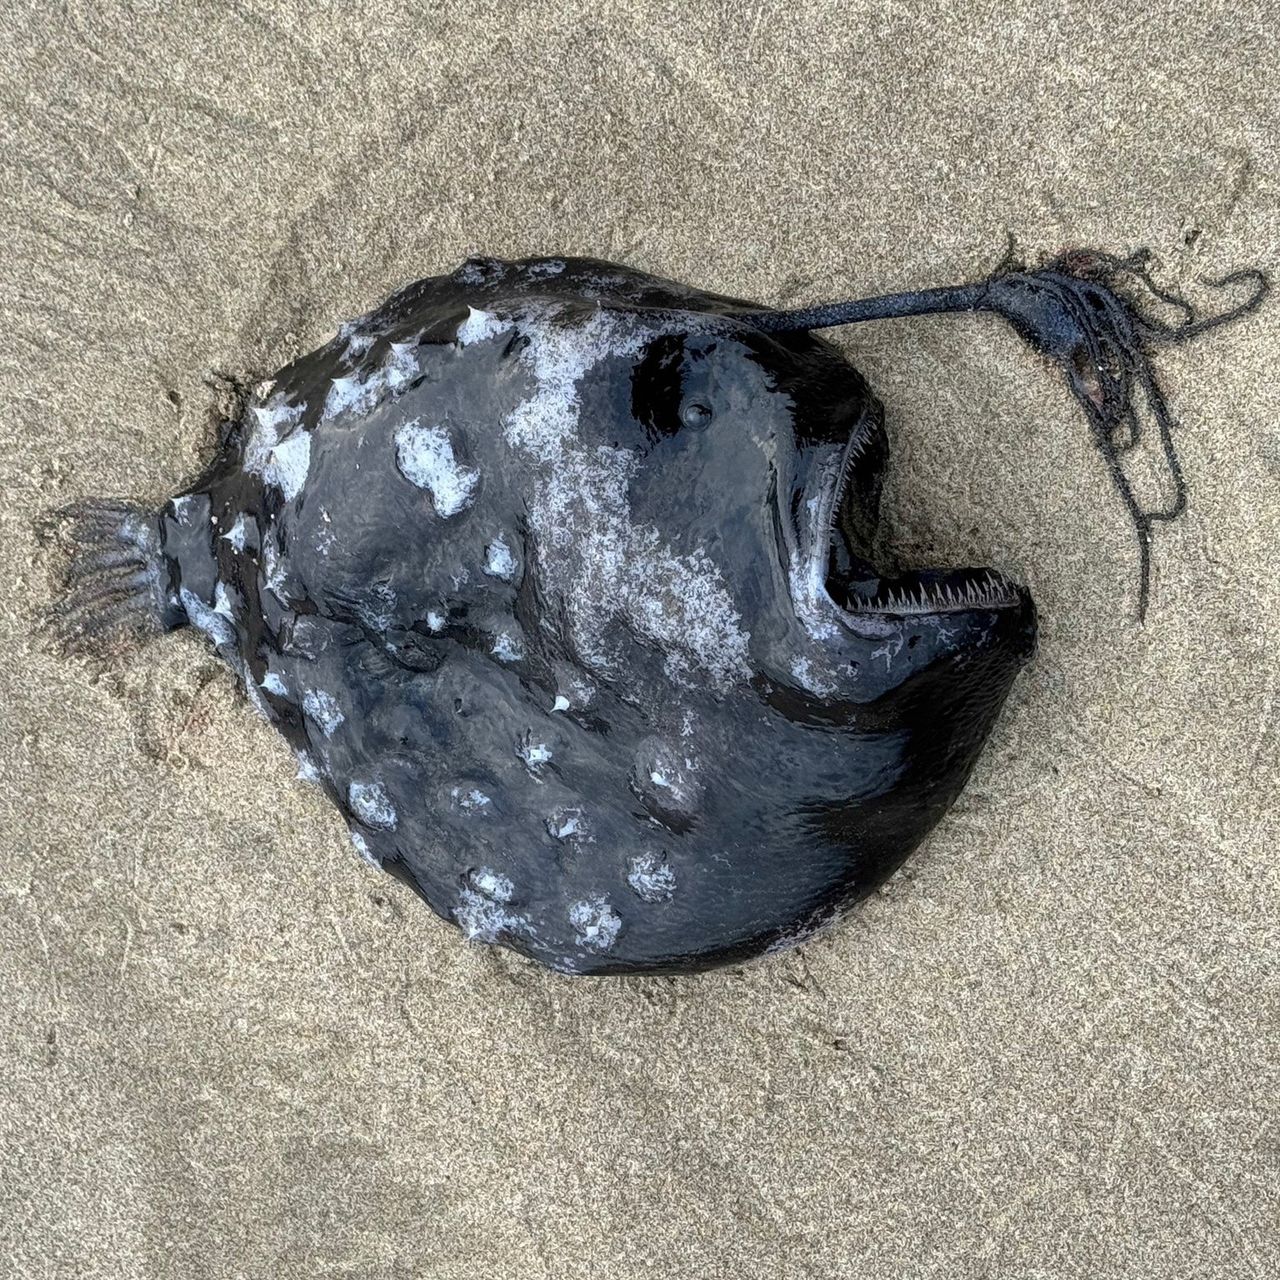 Monkfish found in Oregon (USA)